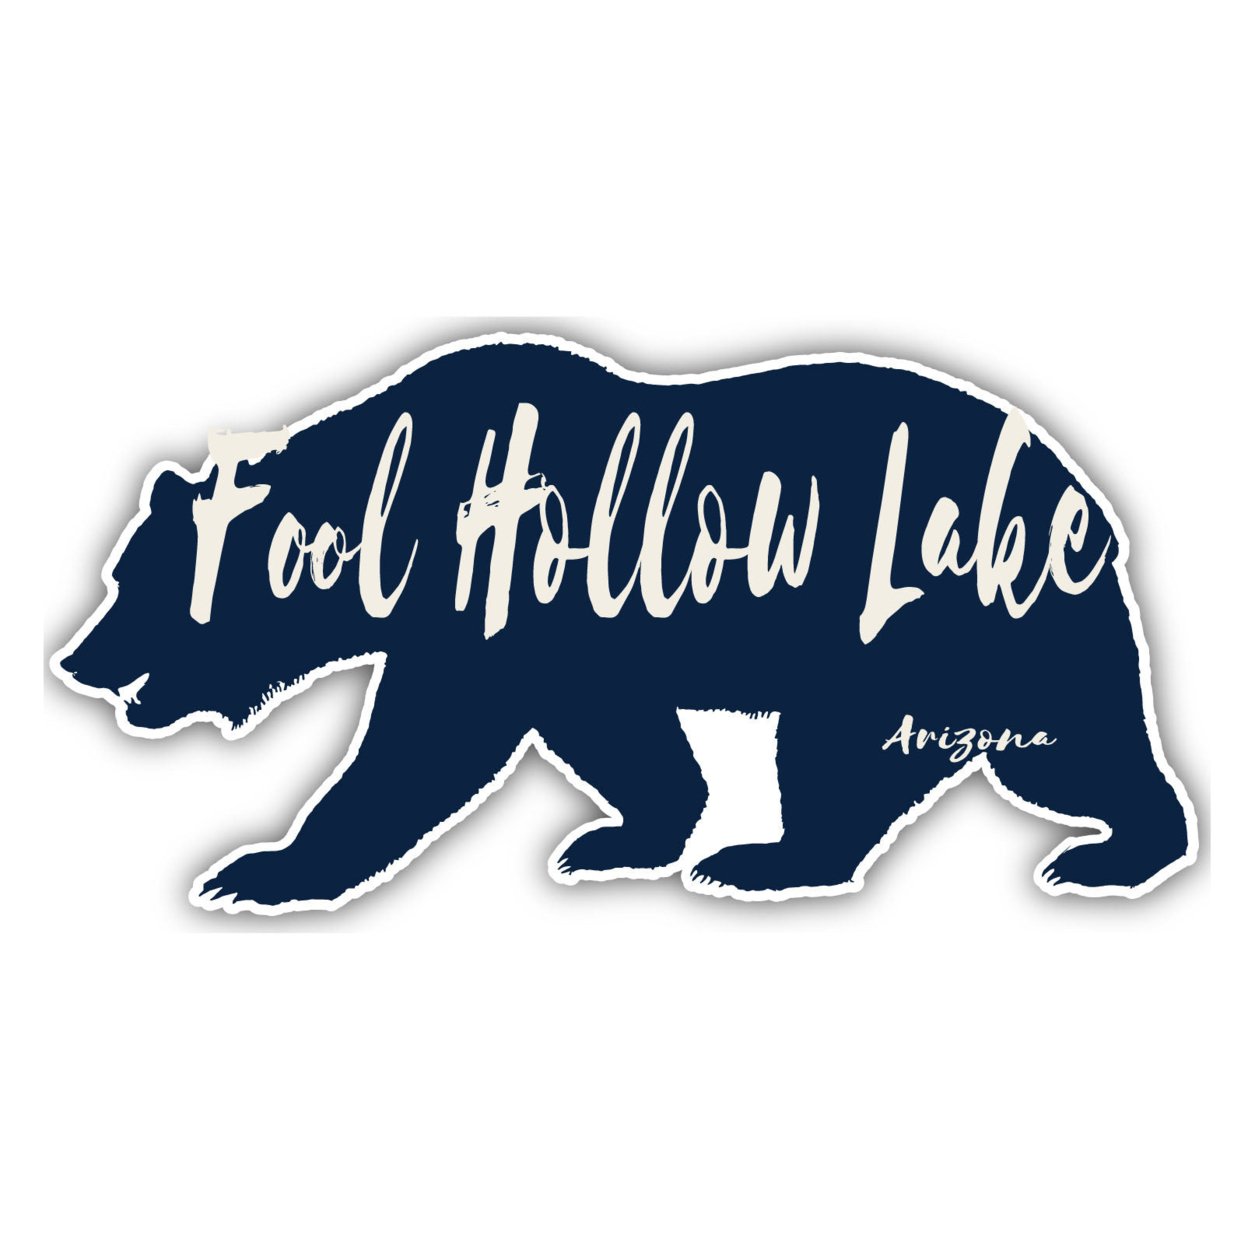 Fool Hollow Lake Arizona Souvenir Decorative Stickers (Choose Theme And Size) - Single Unit, 10-Inch, Tent